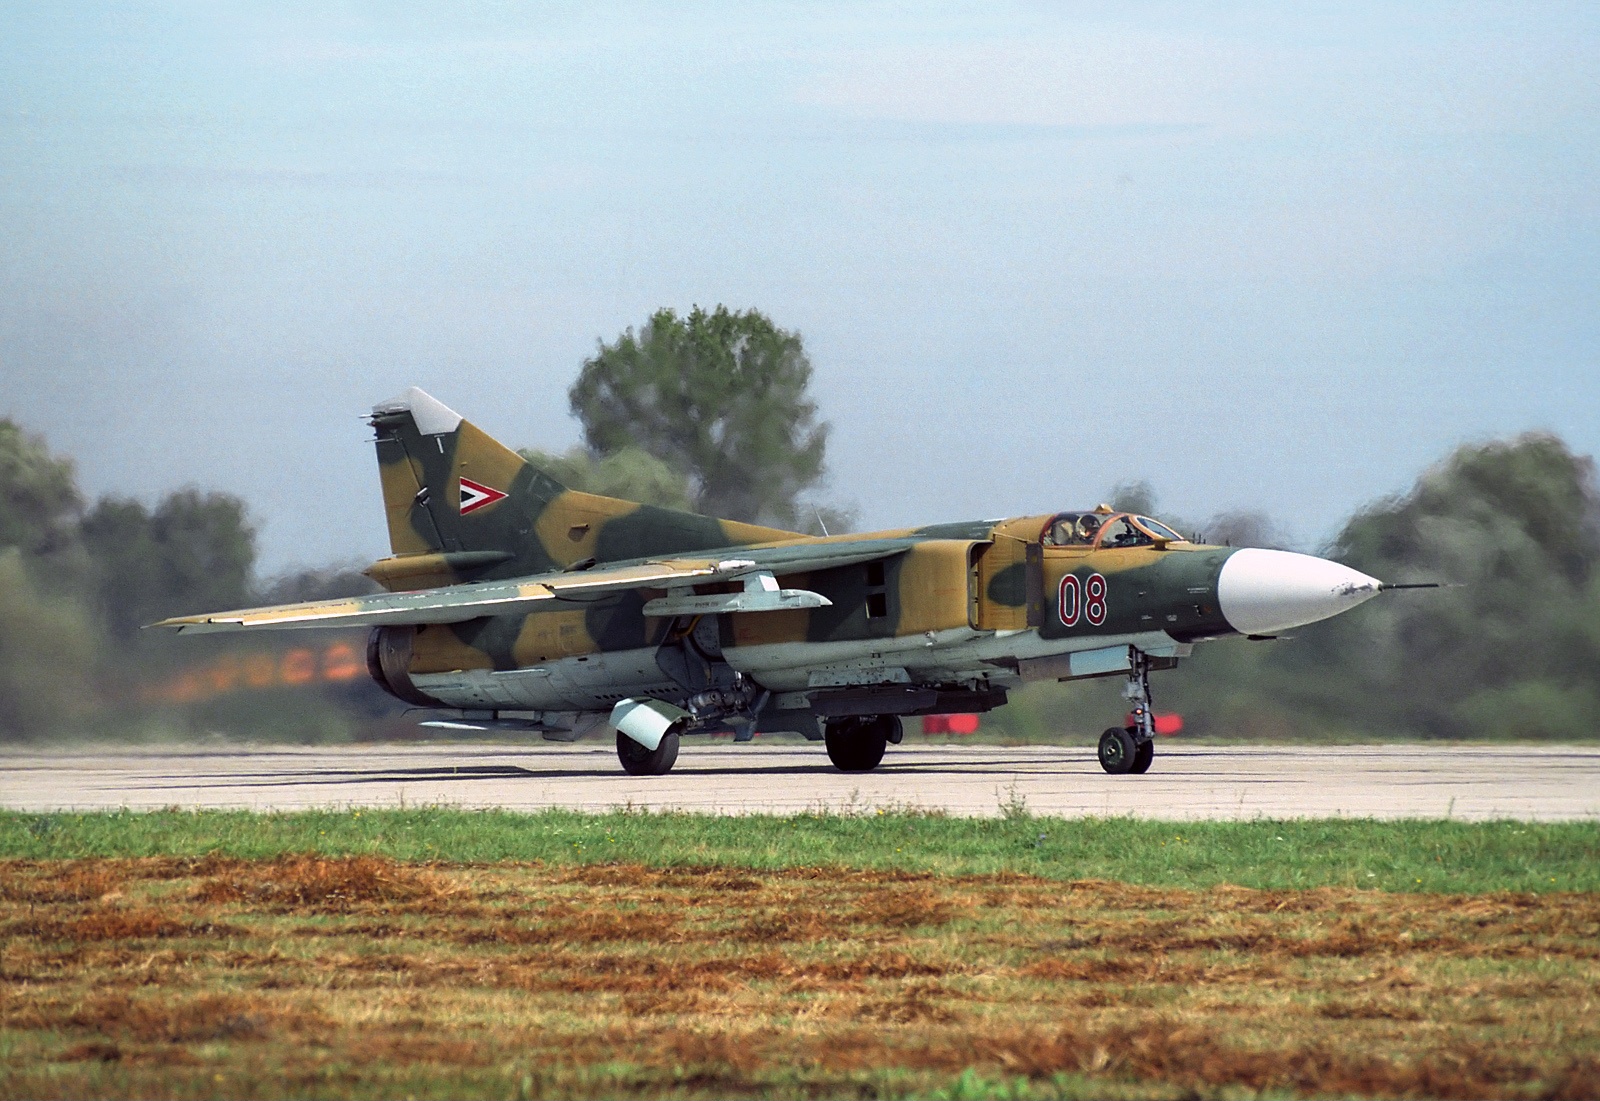 MiG XXI-Hungarian 23MF Air Force. September XVI imago capta est MCMXCI